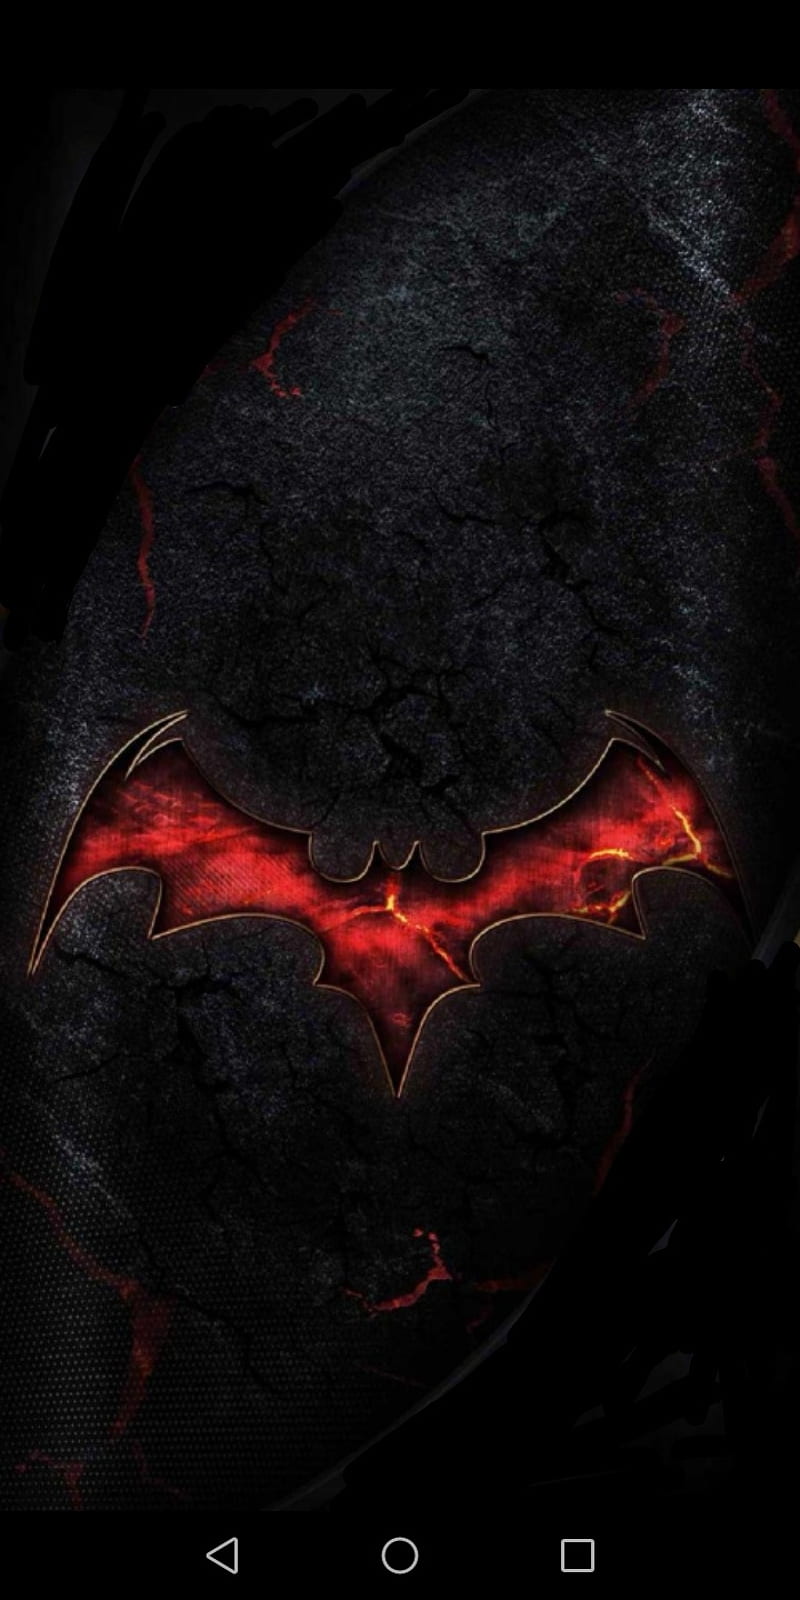 BAT  BLOG  BATMAN TOYS and COLLECTIBLES Cool BATMAN WALLPAPER By Graphic  Artist Chris Franchi